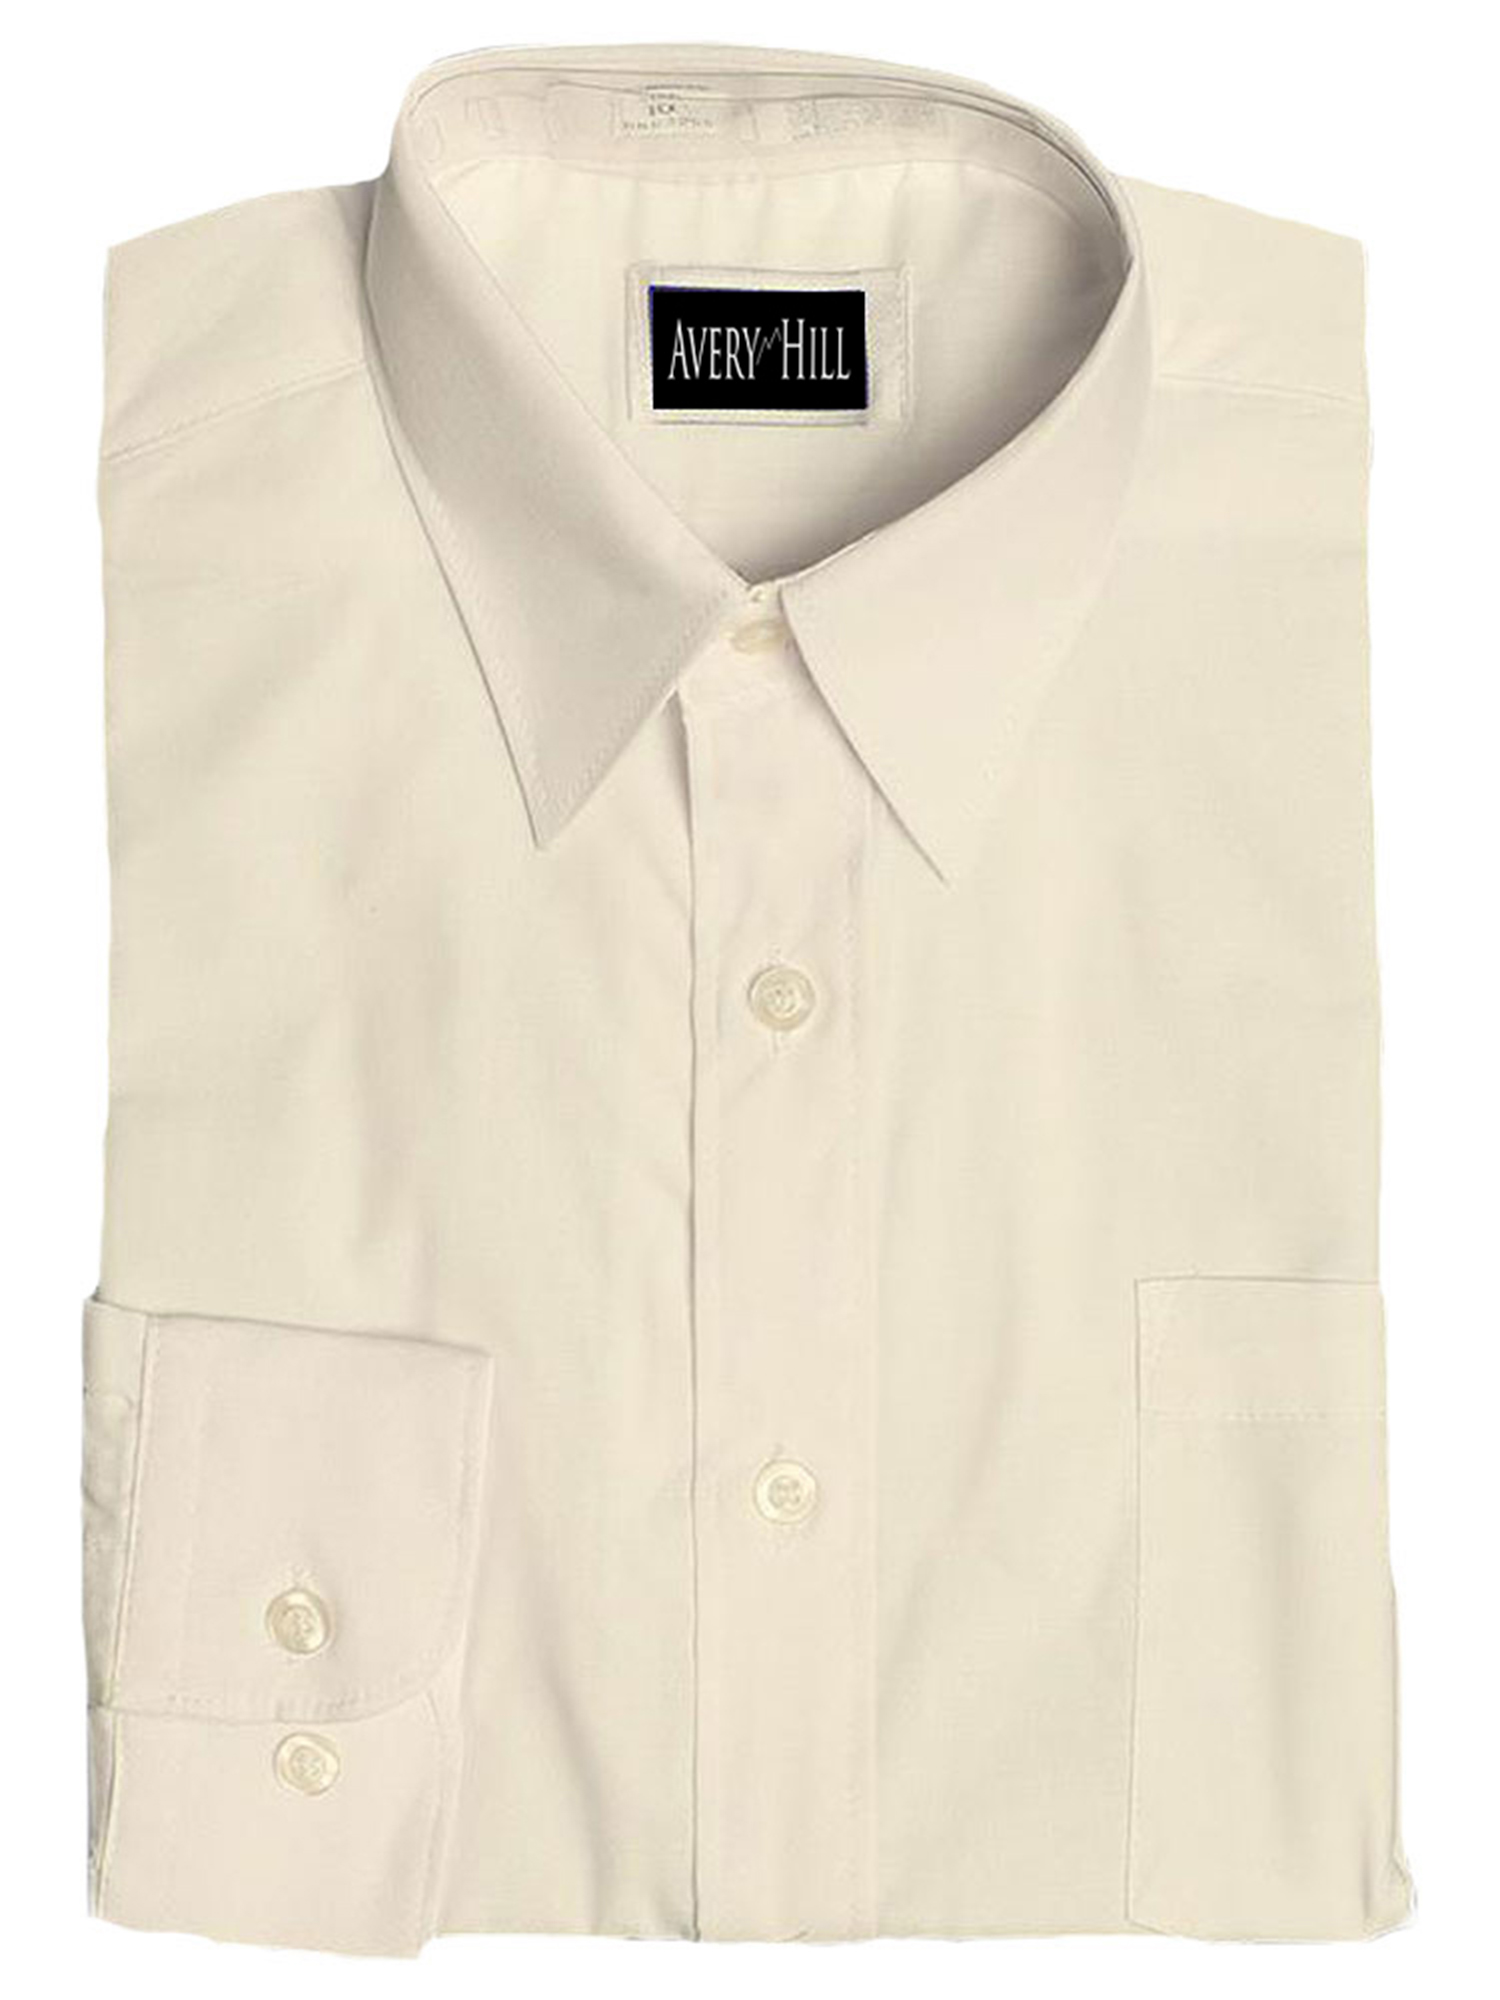 Boys White or Ivory Long Sleeve Wrinkle Resistant Dress Shirt IV M